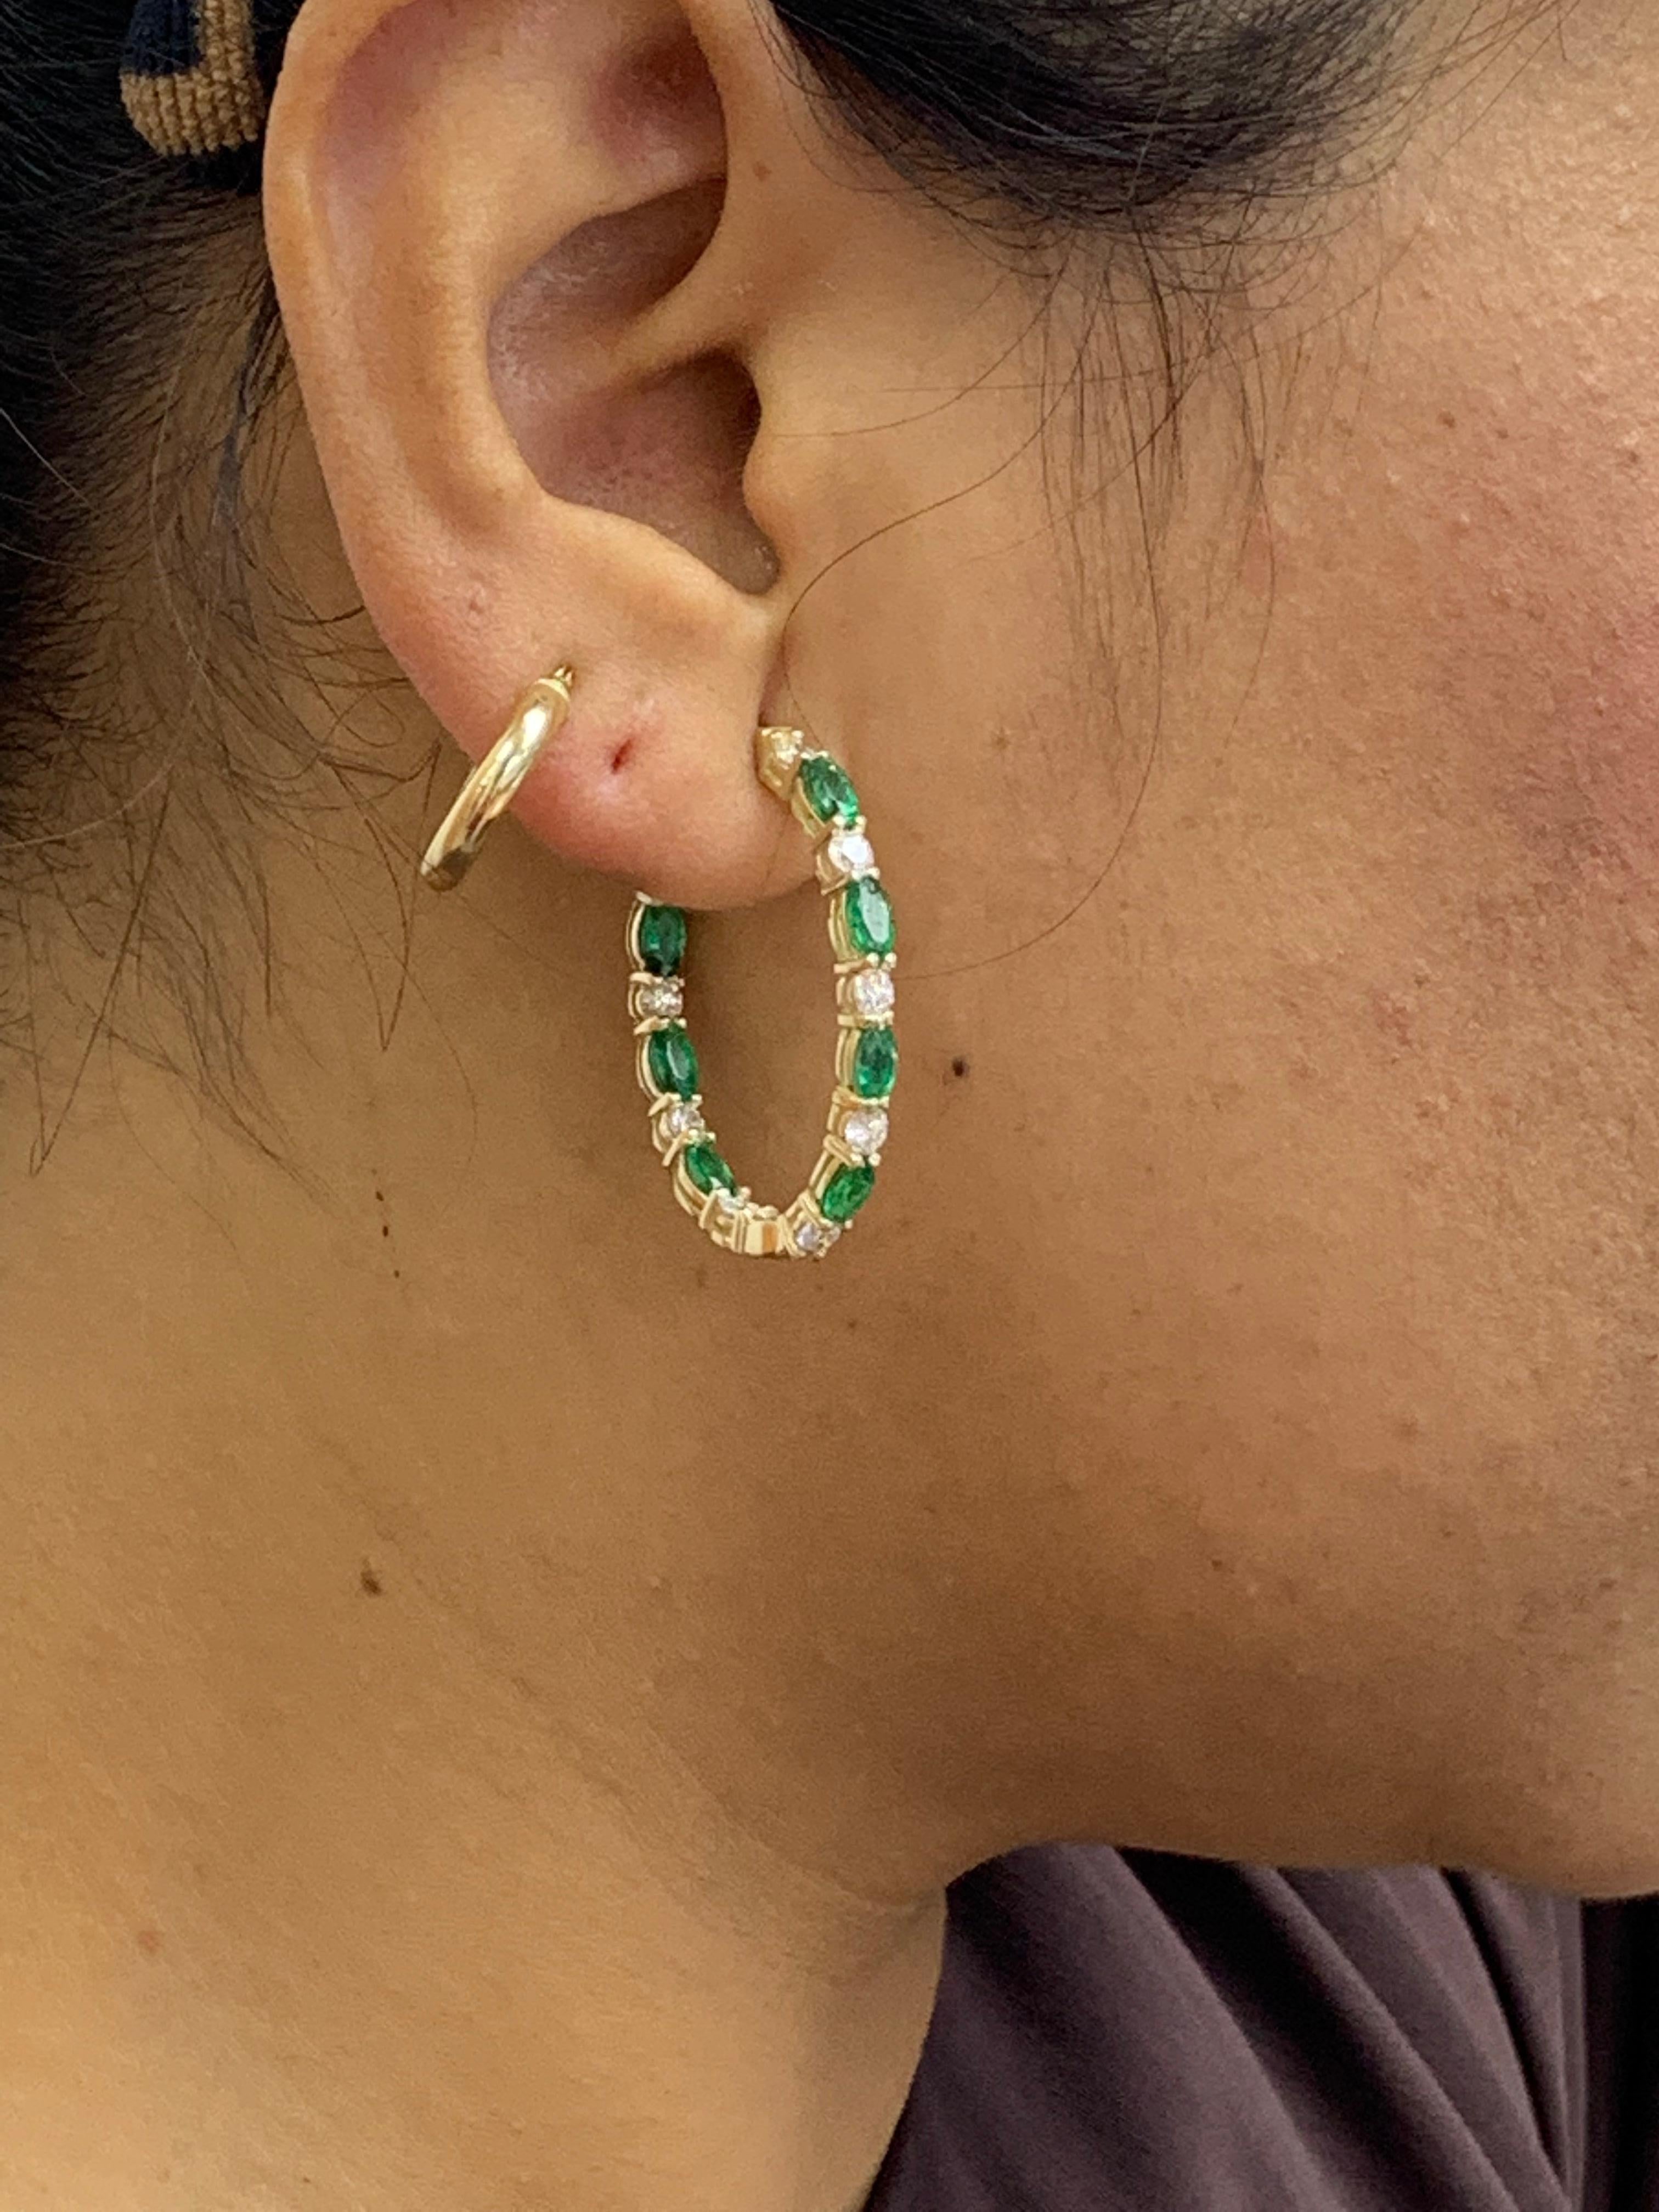 Women's 3.13 Carat Oval Cut Emerald and Diamond Hoop Earrings in 14K Yellow Gold For Sale